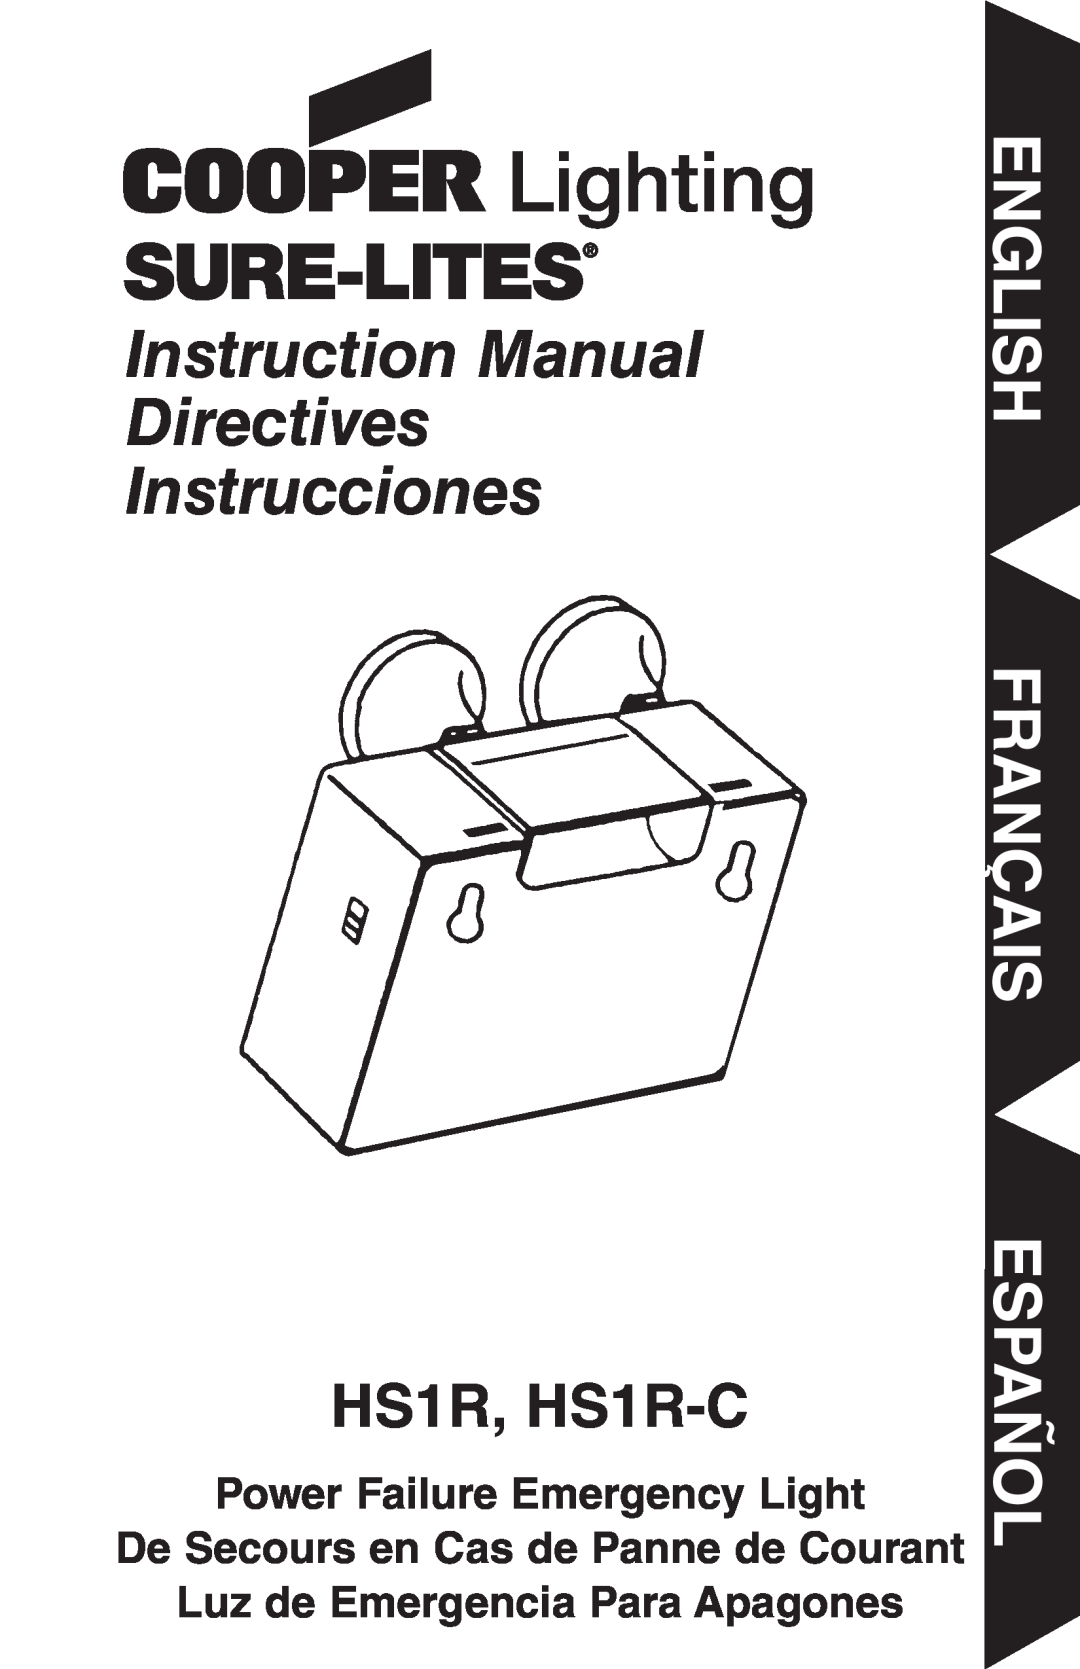 Cooper Lighting Hs 1r instruction manual English Français, Español, HS1R, HS1R-C, Power Failure Emergency Light 